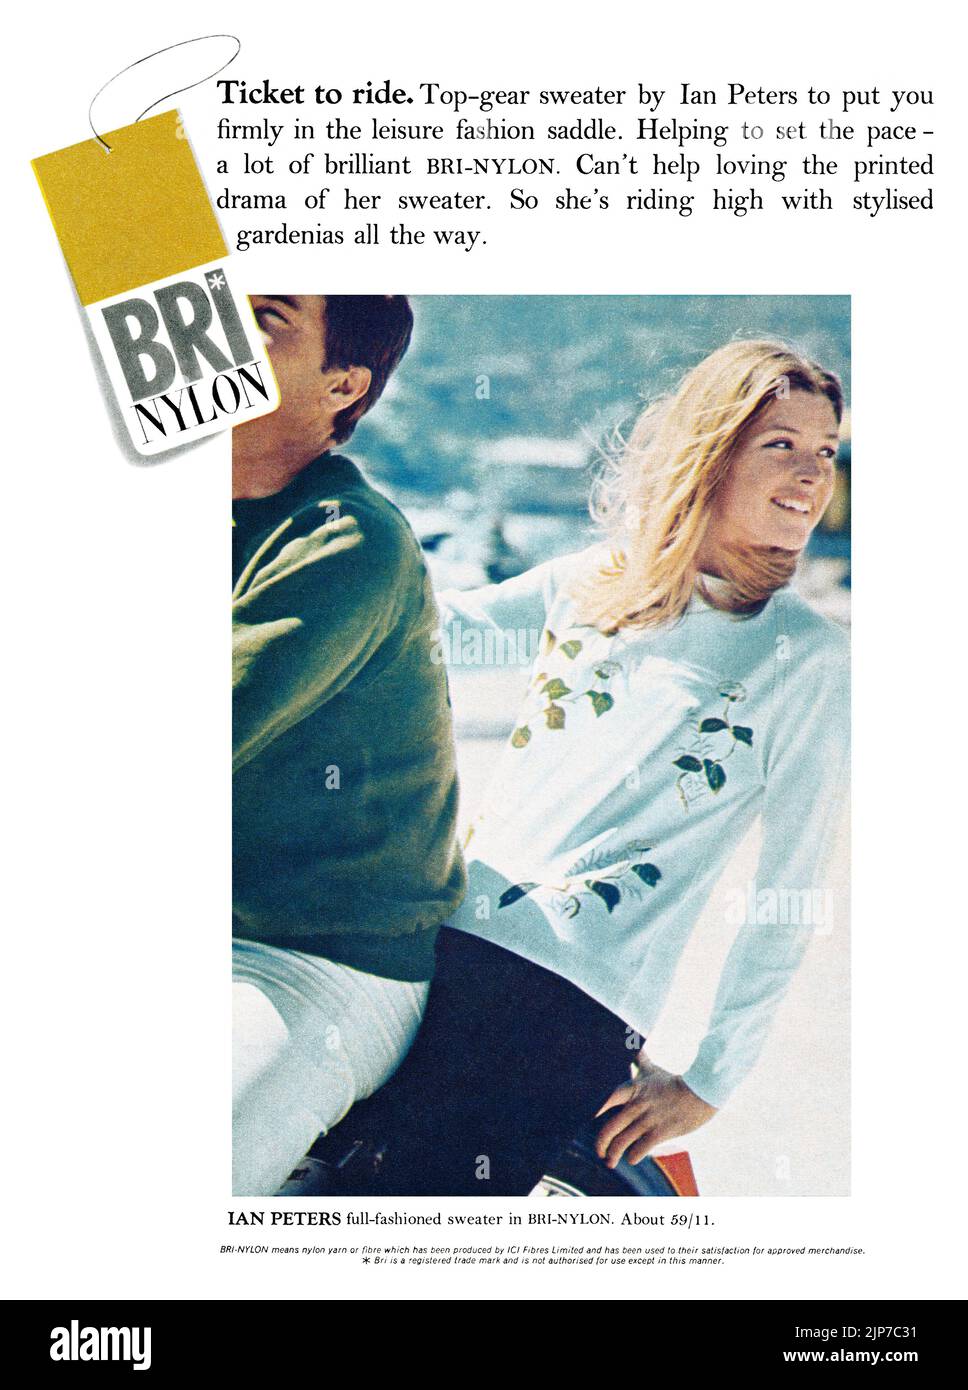 1965 British advertisement for Bri-Nylon fashion fabrics, featuring a sweater by Ian Peters. Stock Photo